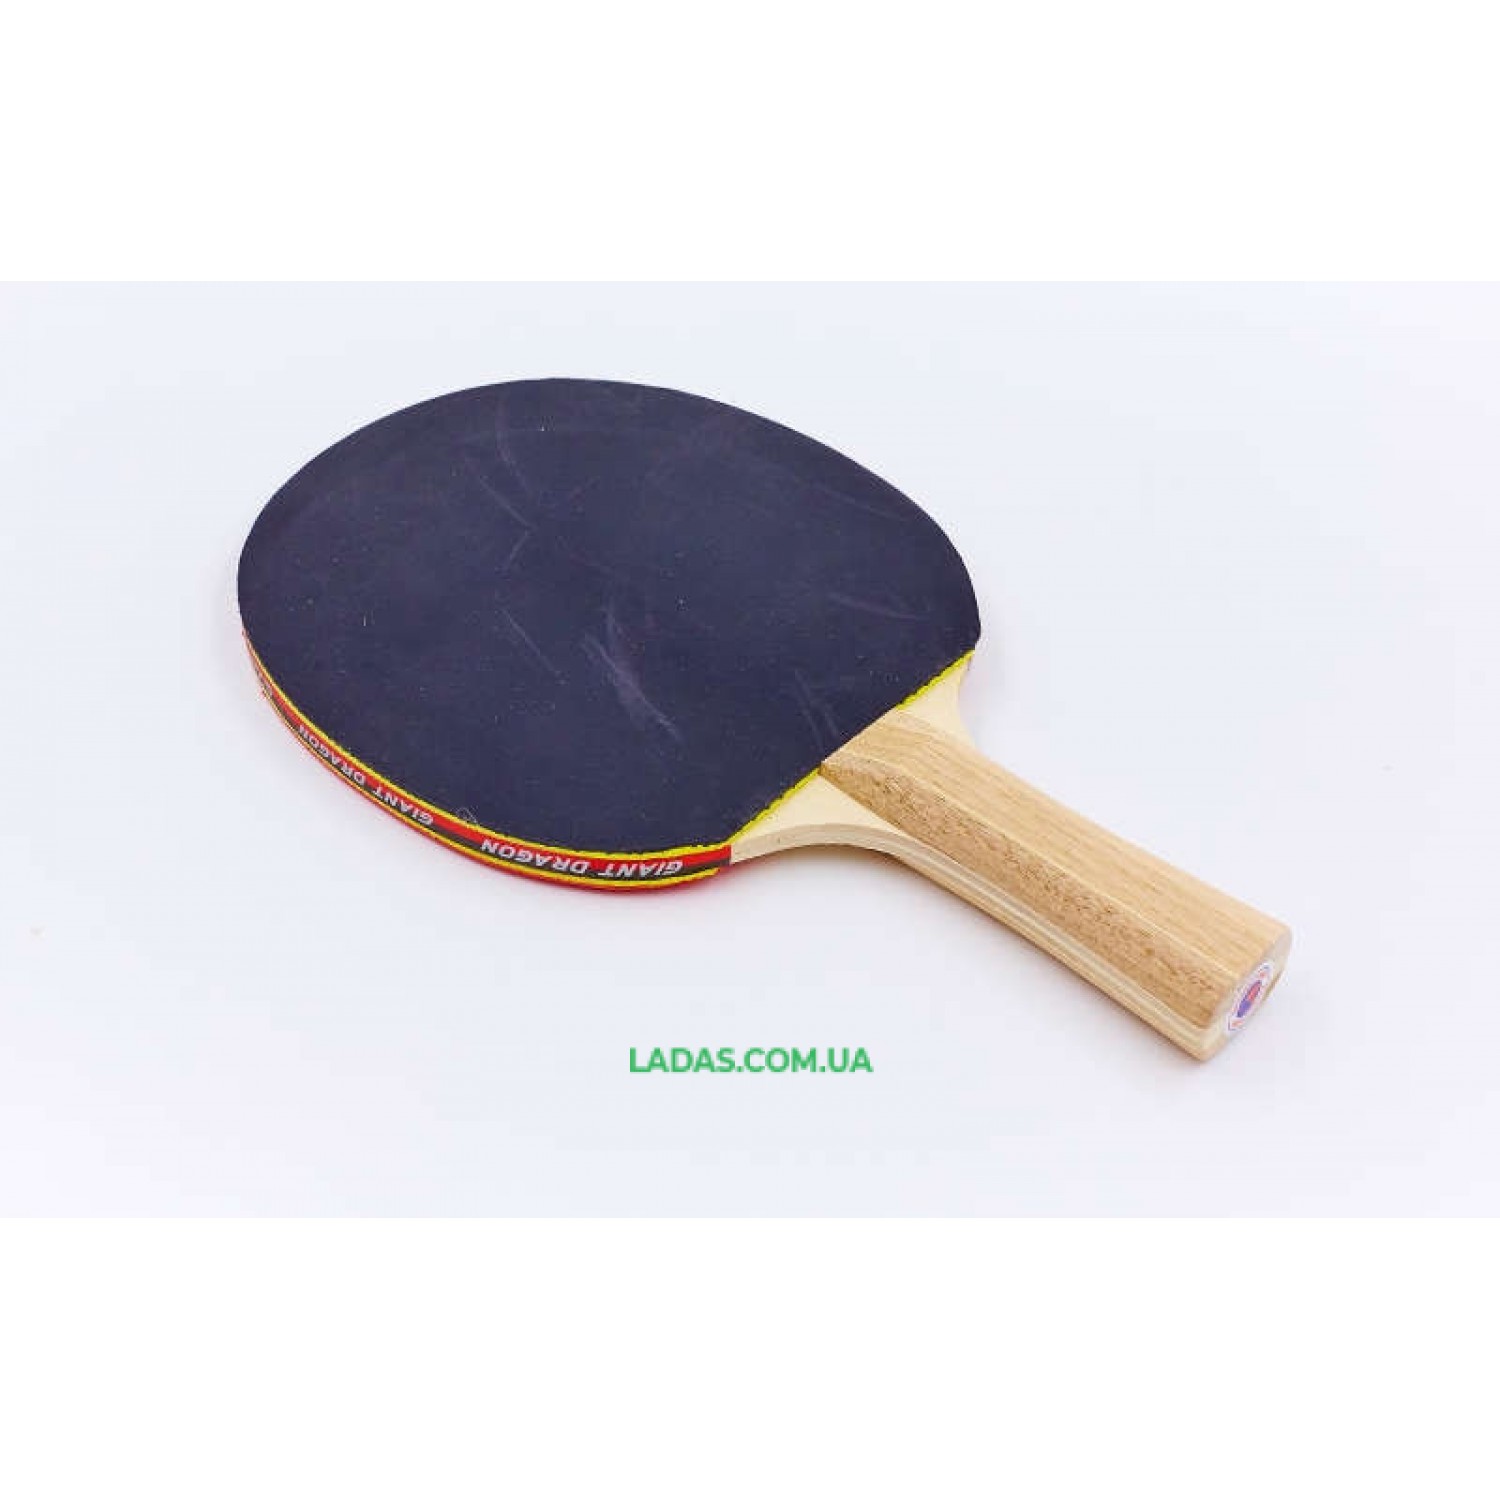 Ракетка для настольного тенниса 1 штука GIANT DRAGON ENERGY SERIES( древесина, резина)